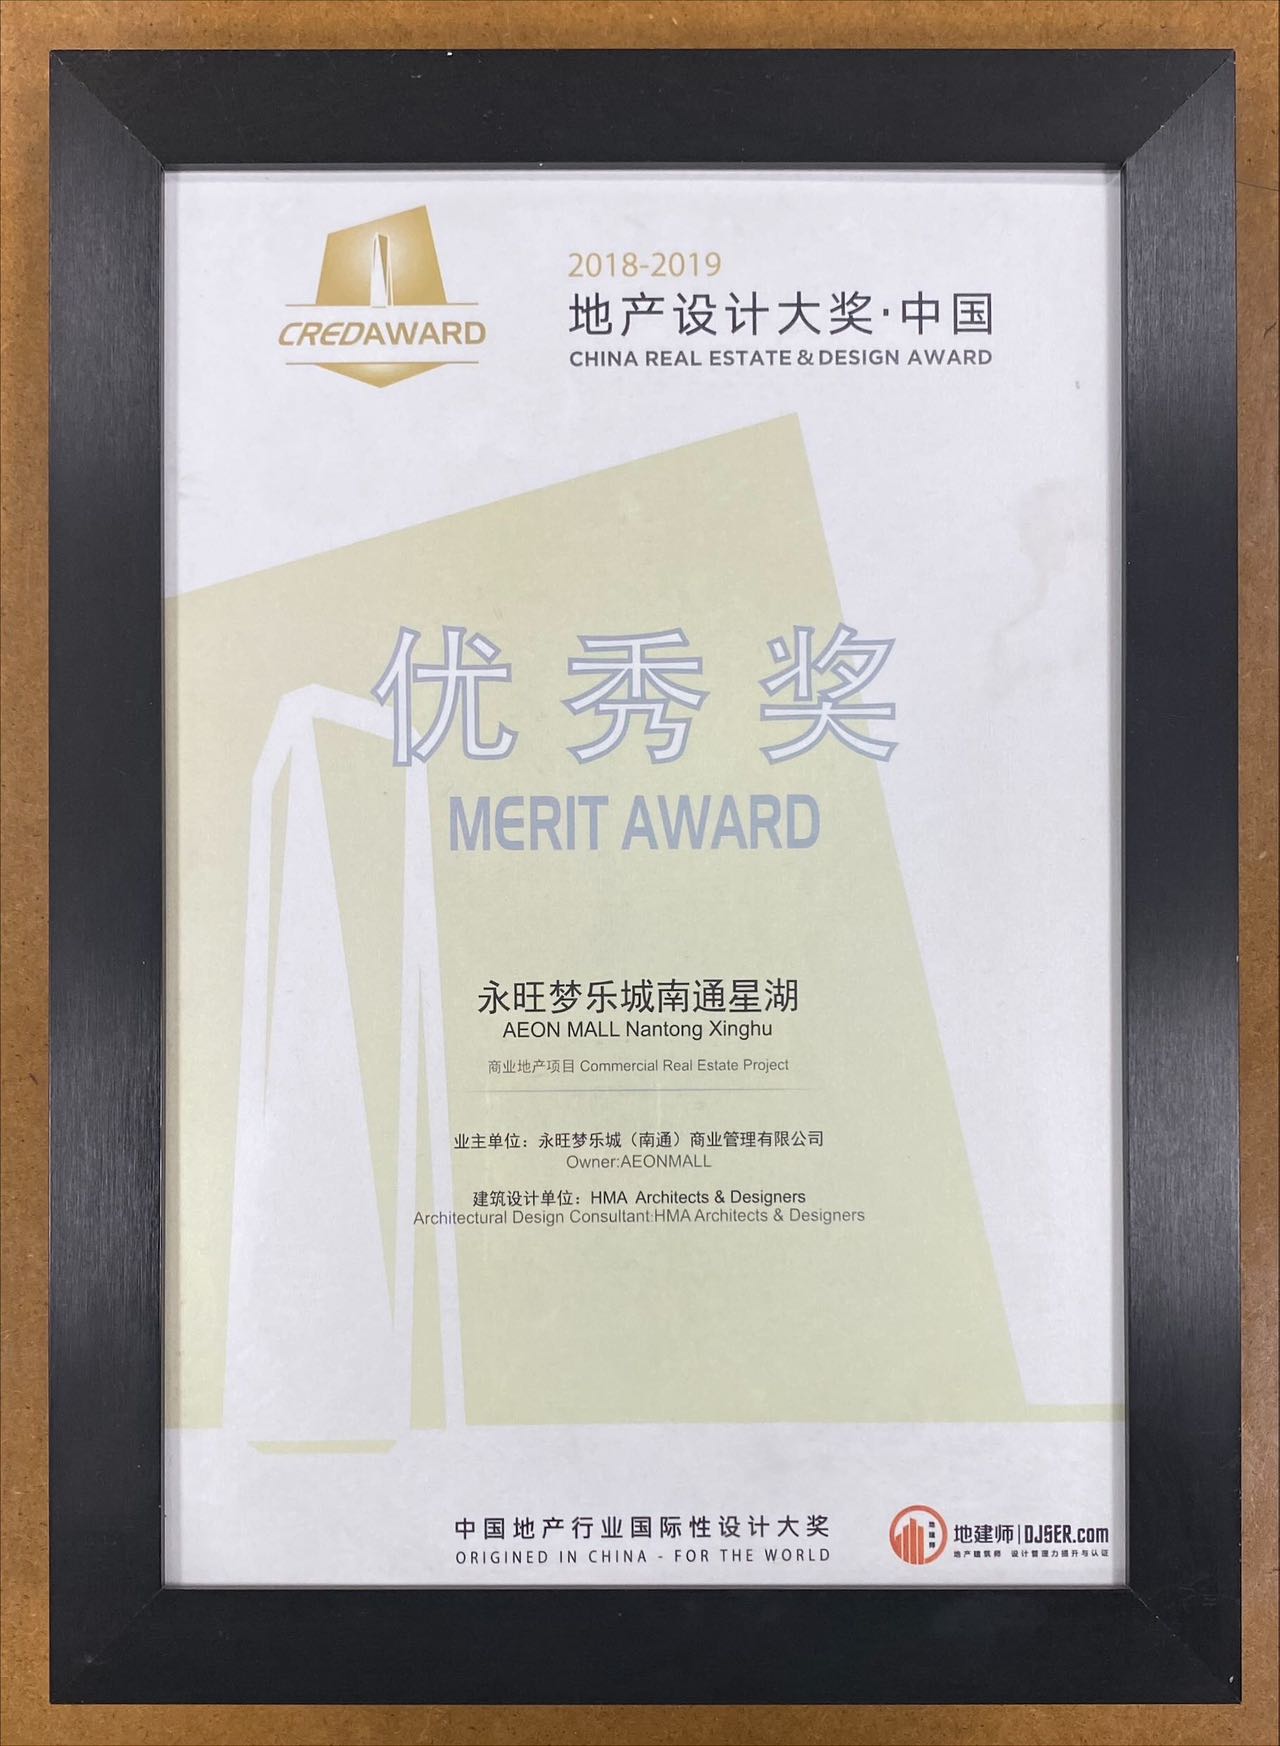 2018-2019 China Real Estate & Design Award (CREDAWARD) Merit Award